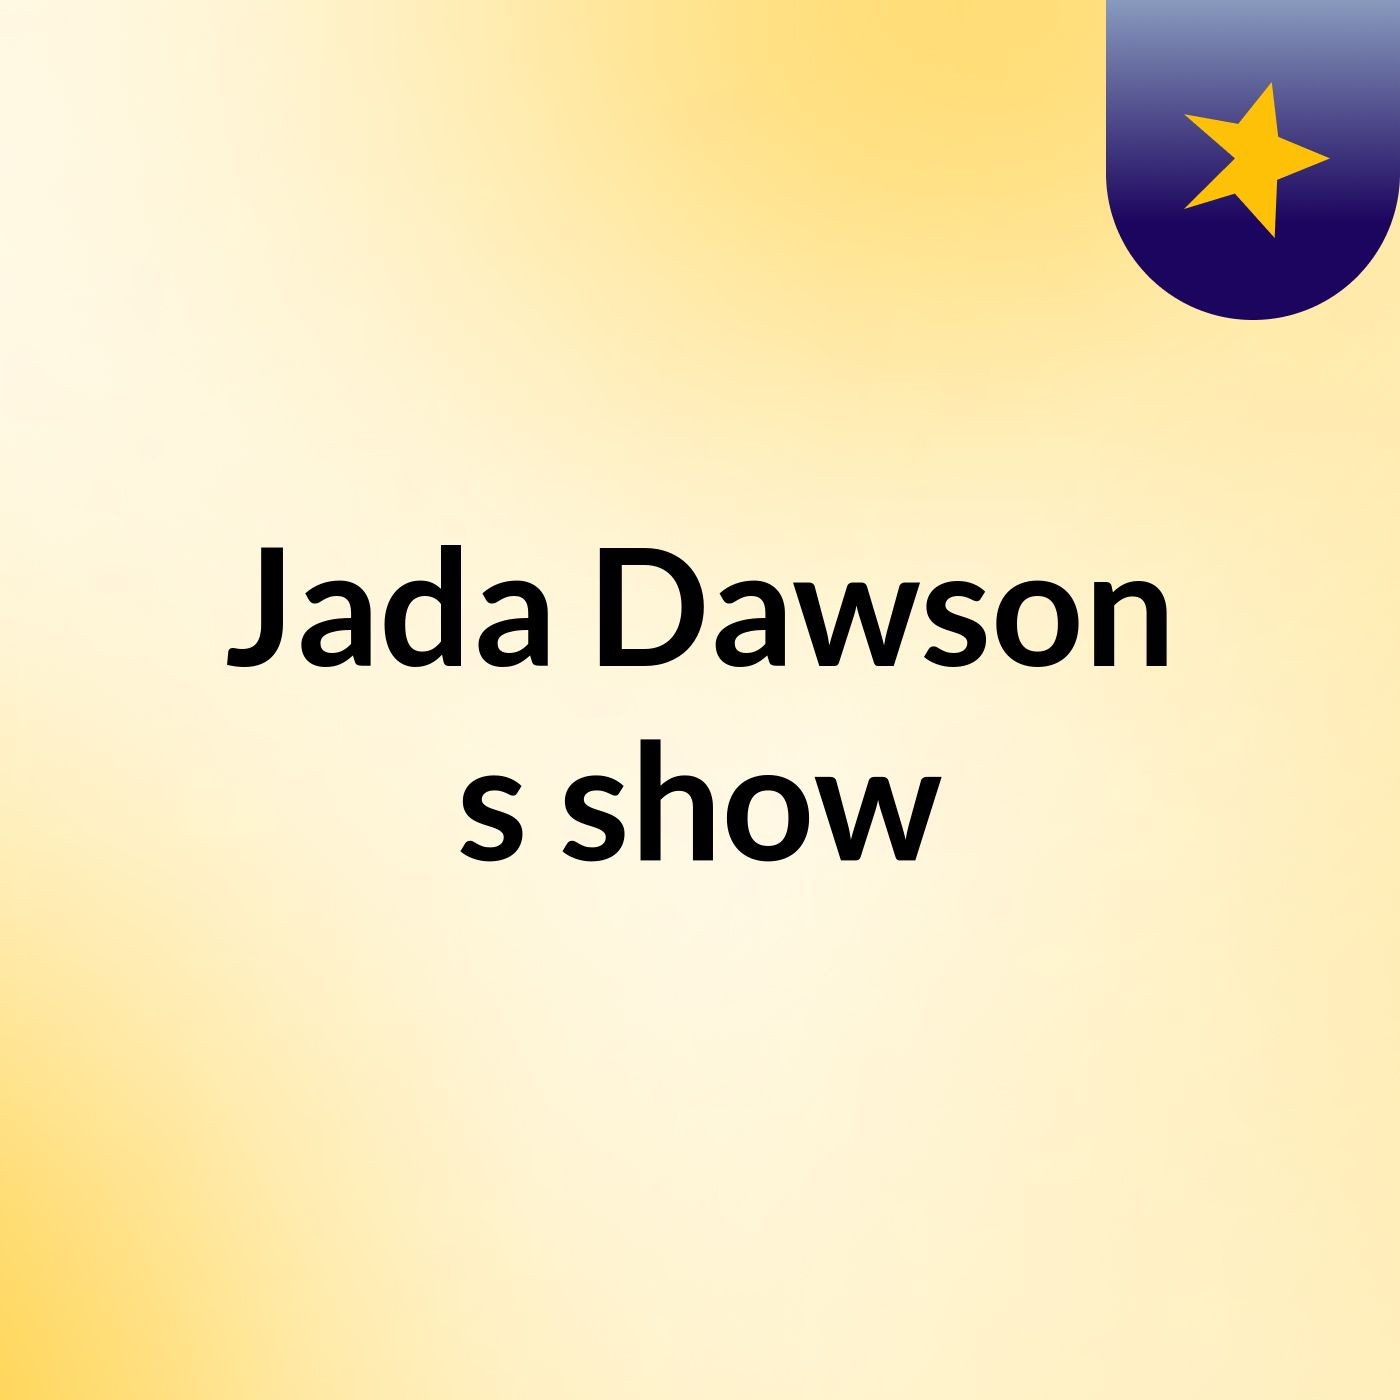 Jada Dawson's show